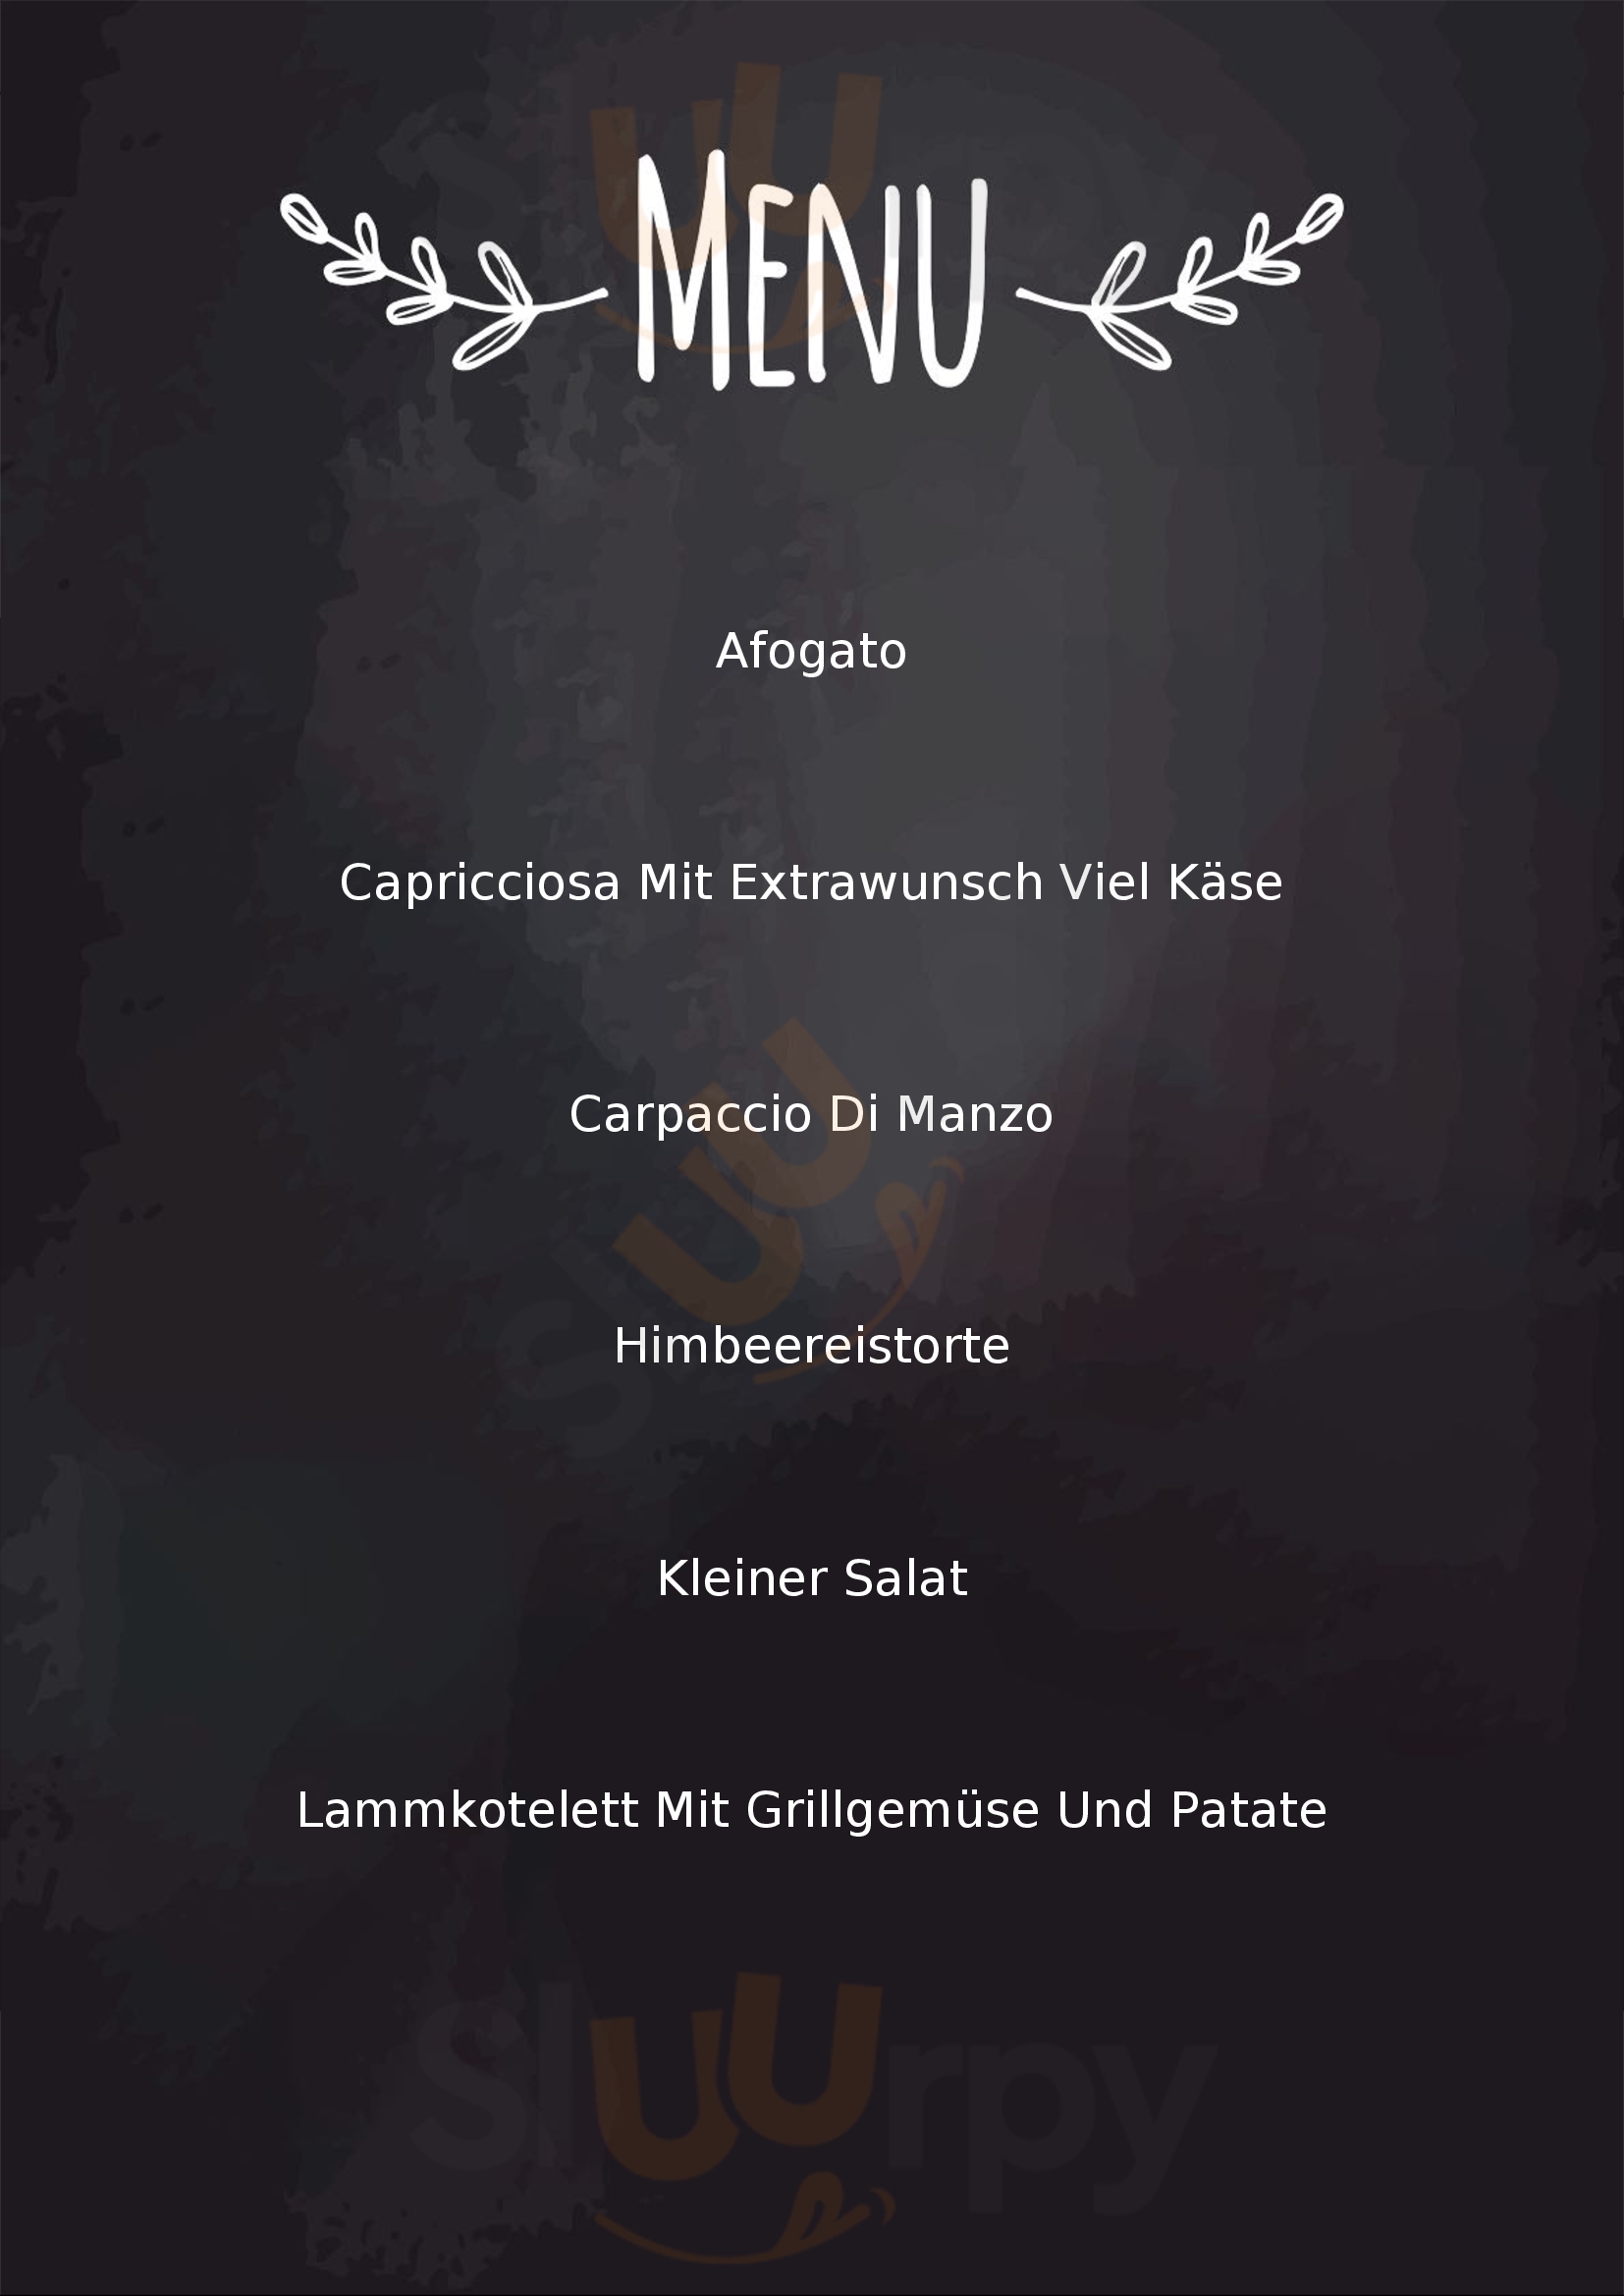 Restaurant Elisabeth Innsbruck Menu - 1